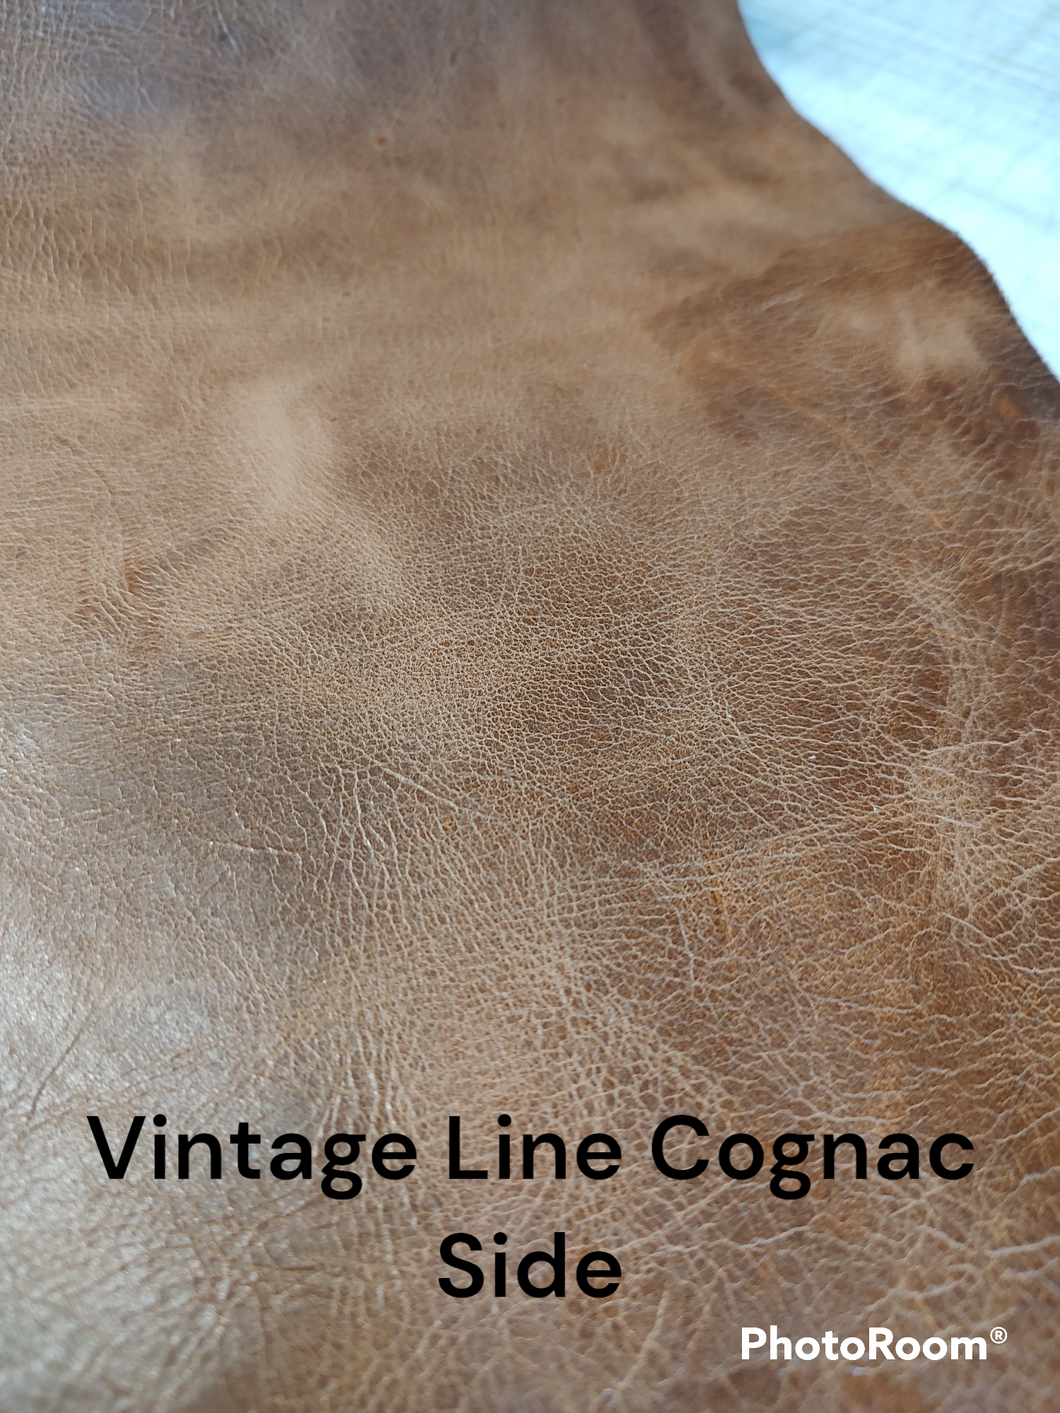 Vintage Line Cognac Side